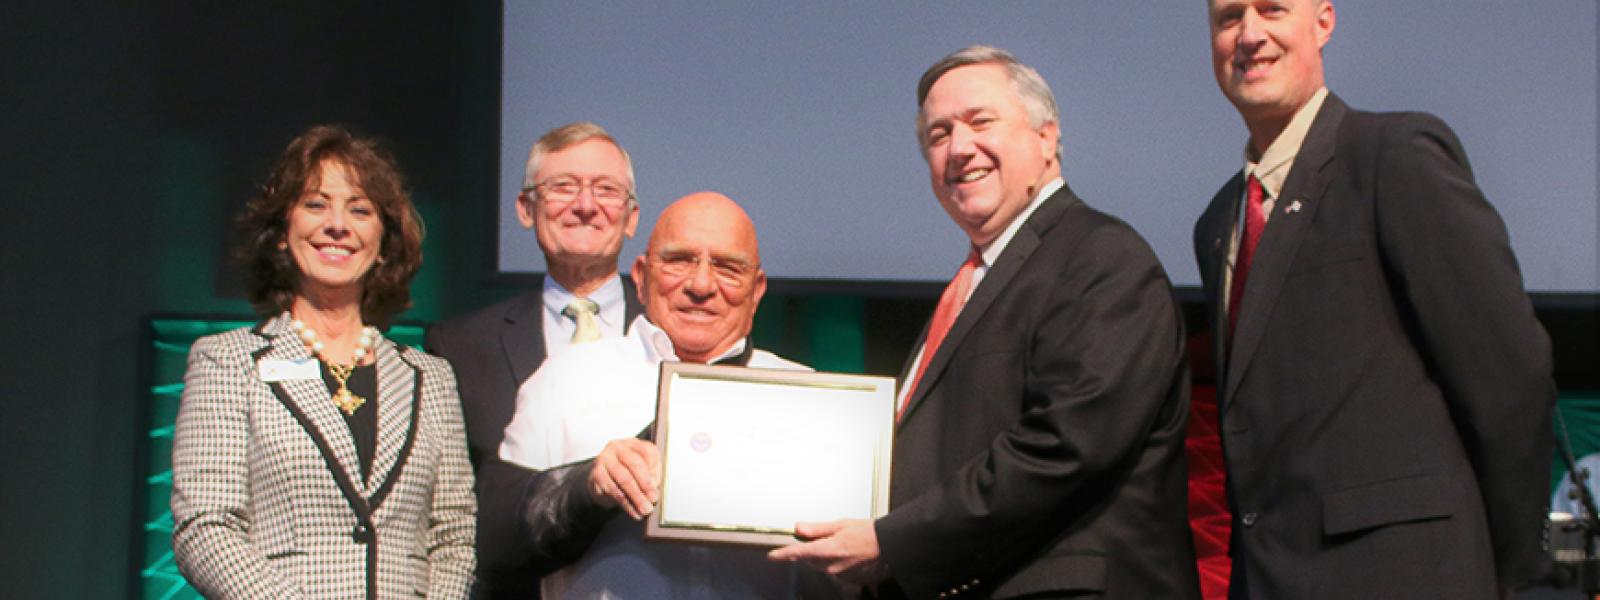 ESGR Patriot Award presented to CIU President Dr. Mark Smith. 